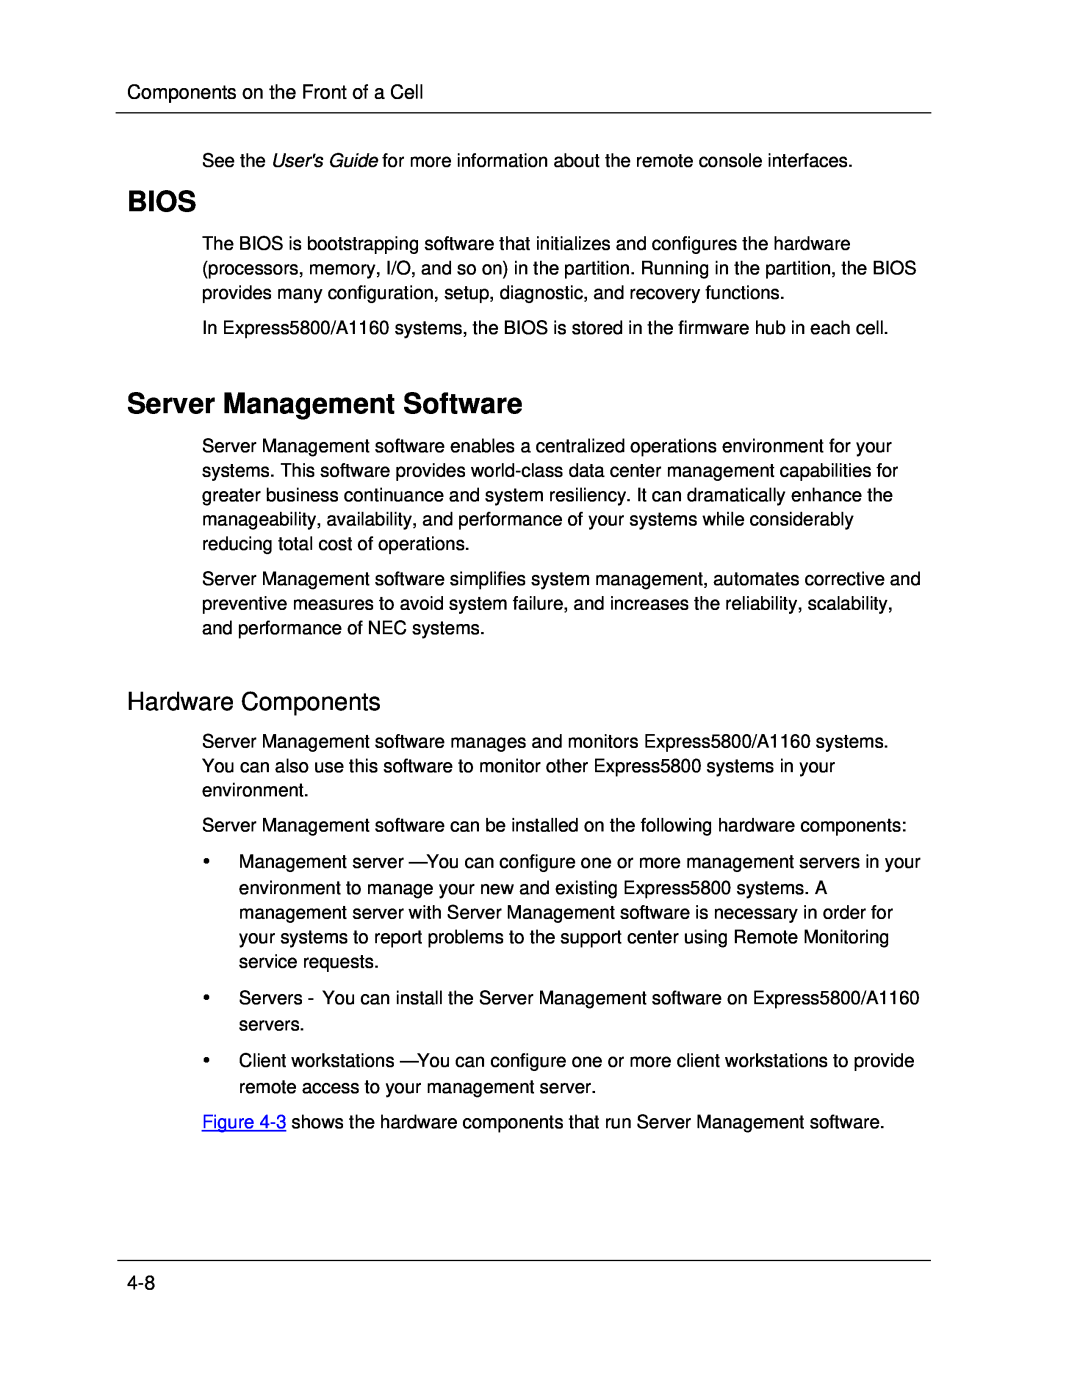 NEC A1160 manual Bios, Server Management Software, Hardware Components 